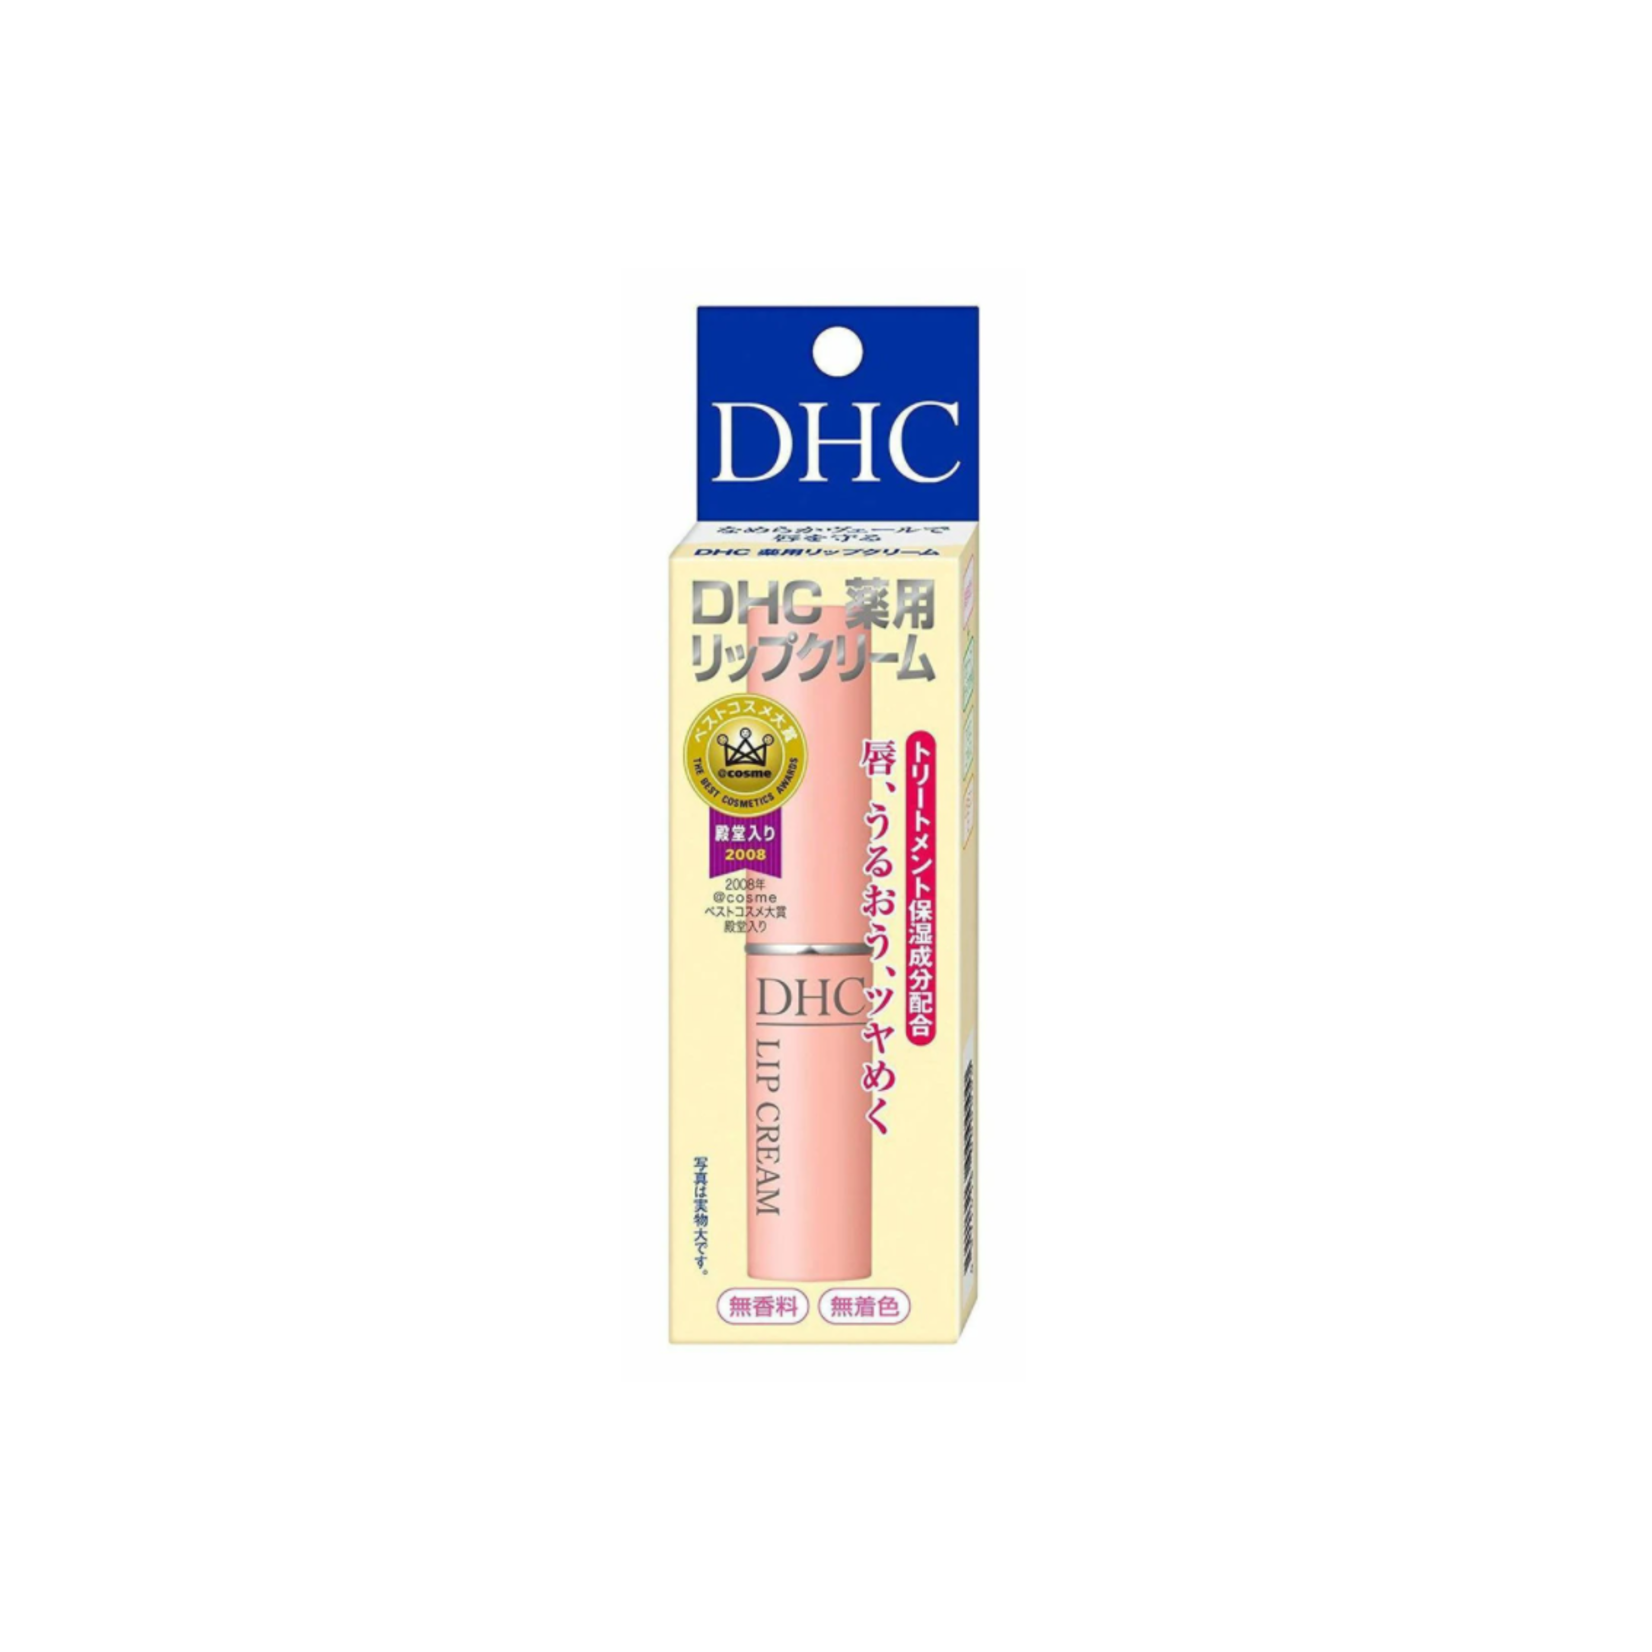 DHC DHC Lip Blam 1.5g